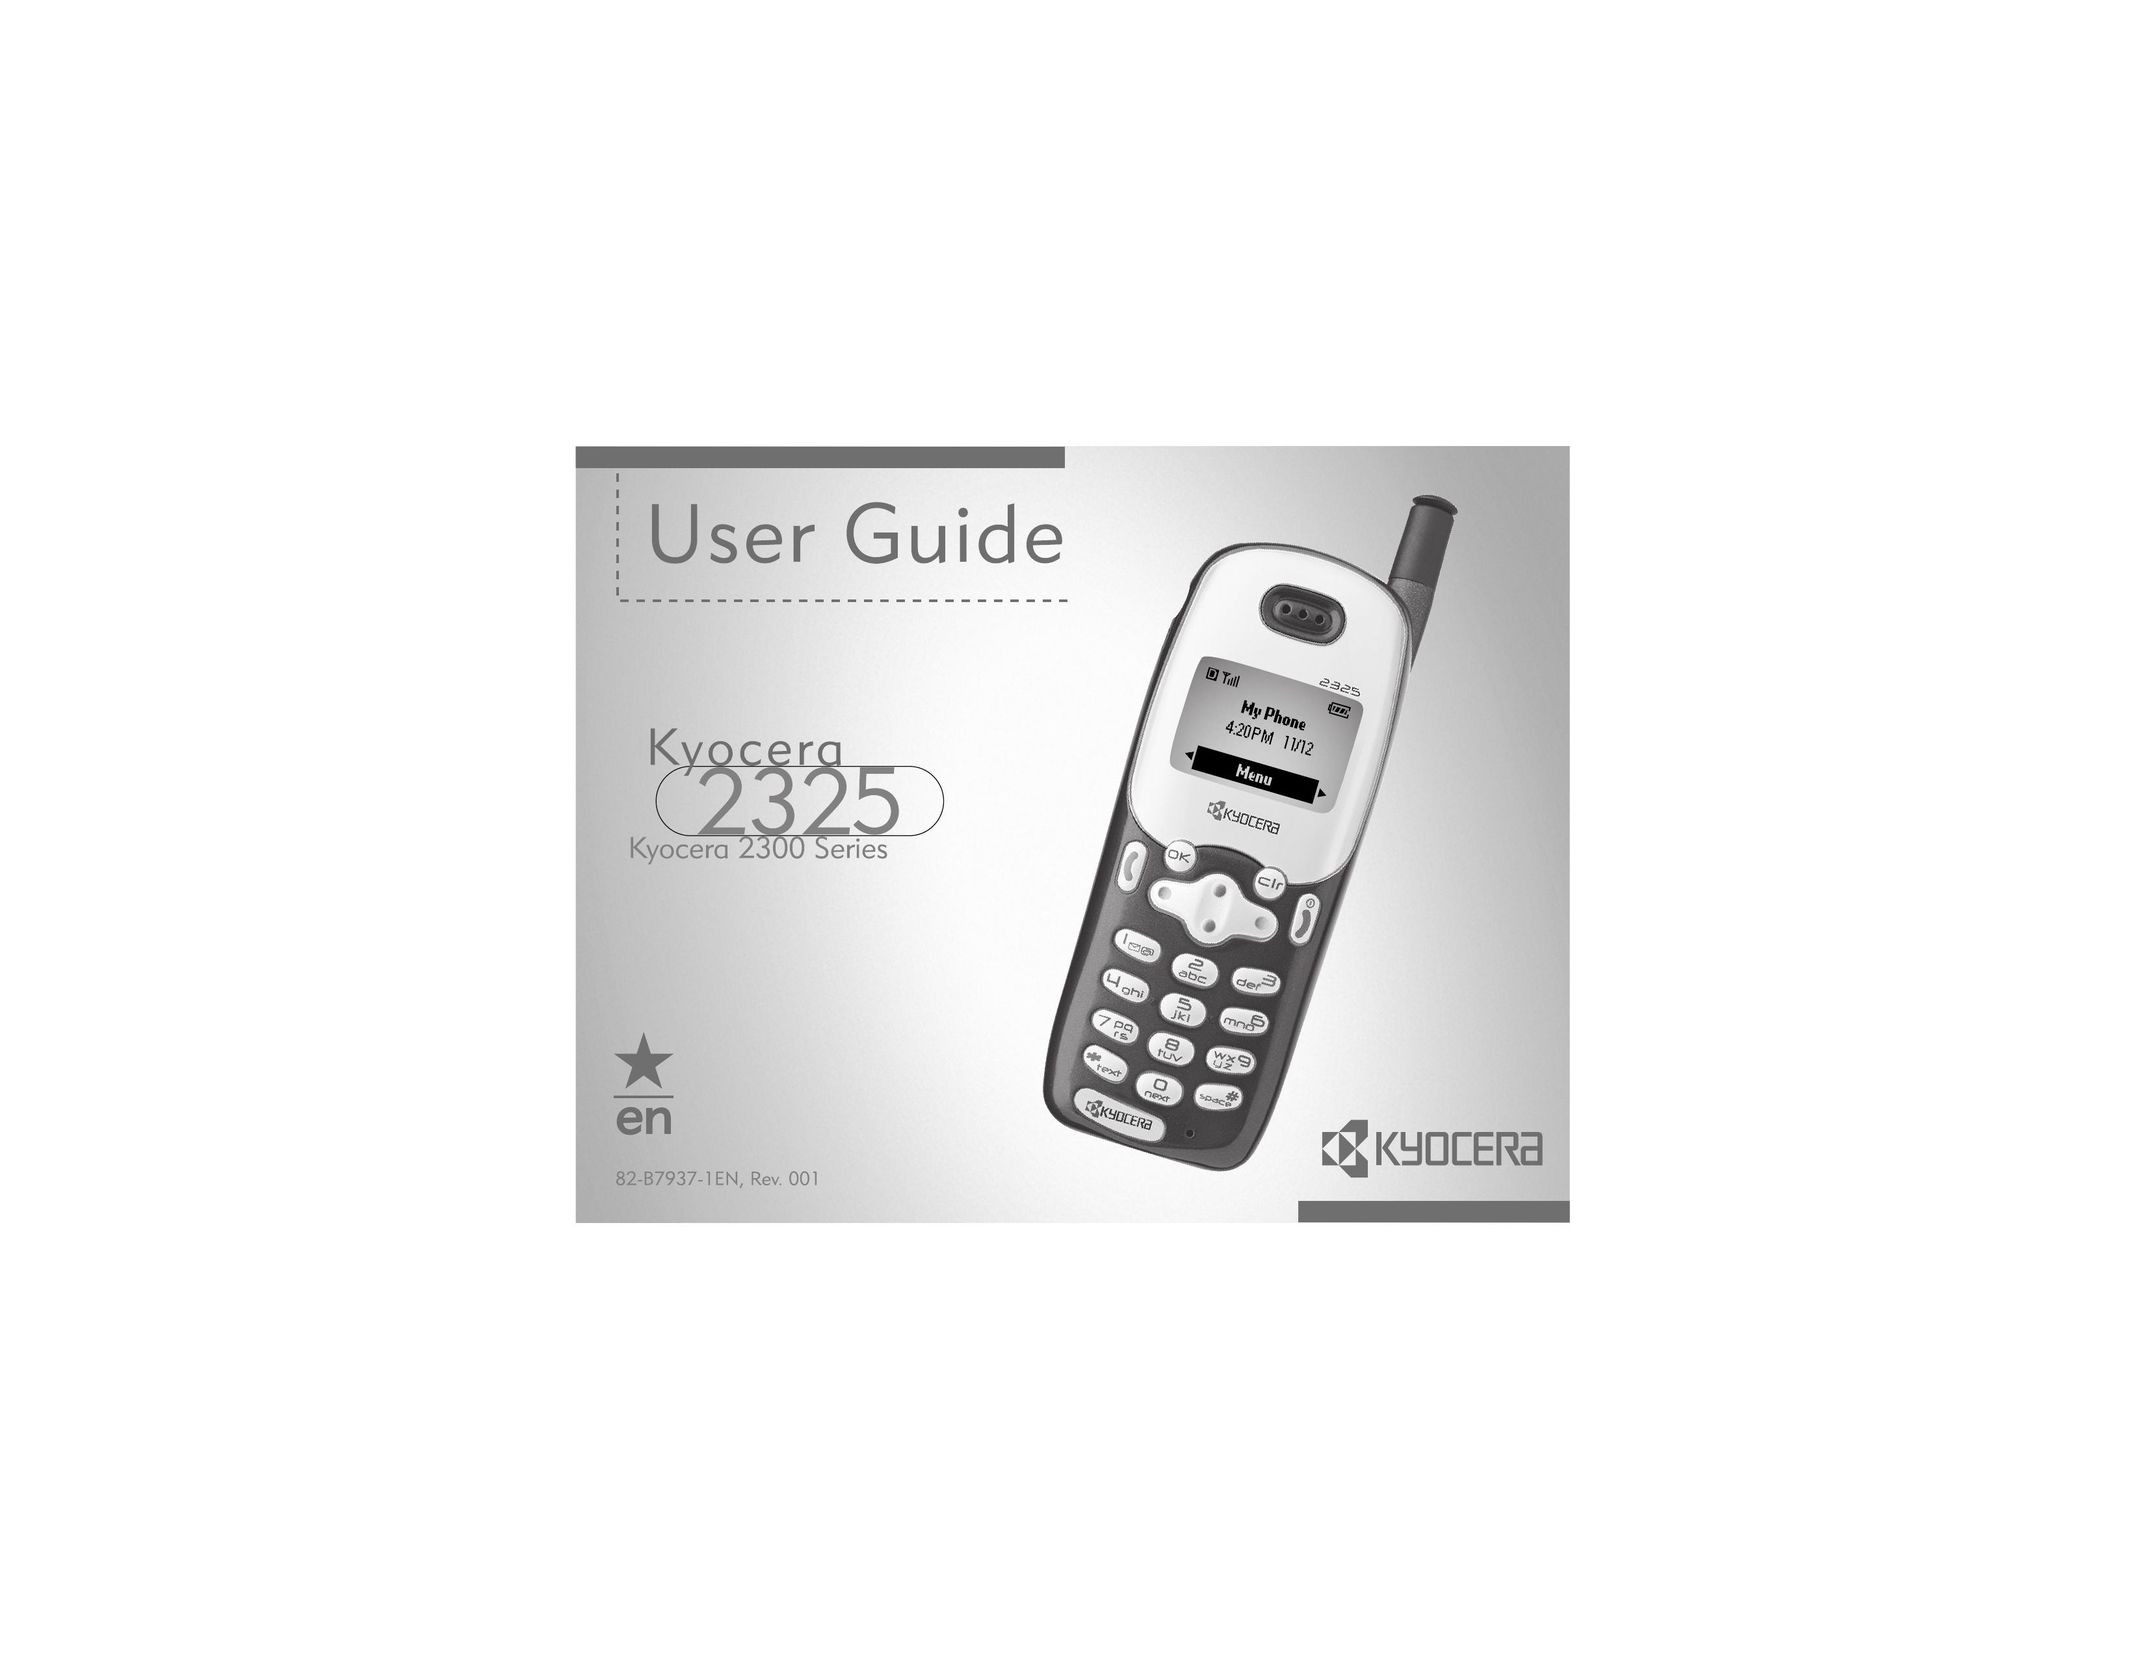 Kyocera 2300 Series Cell Phone User Manual